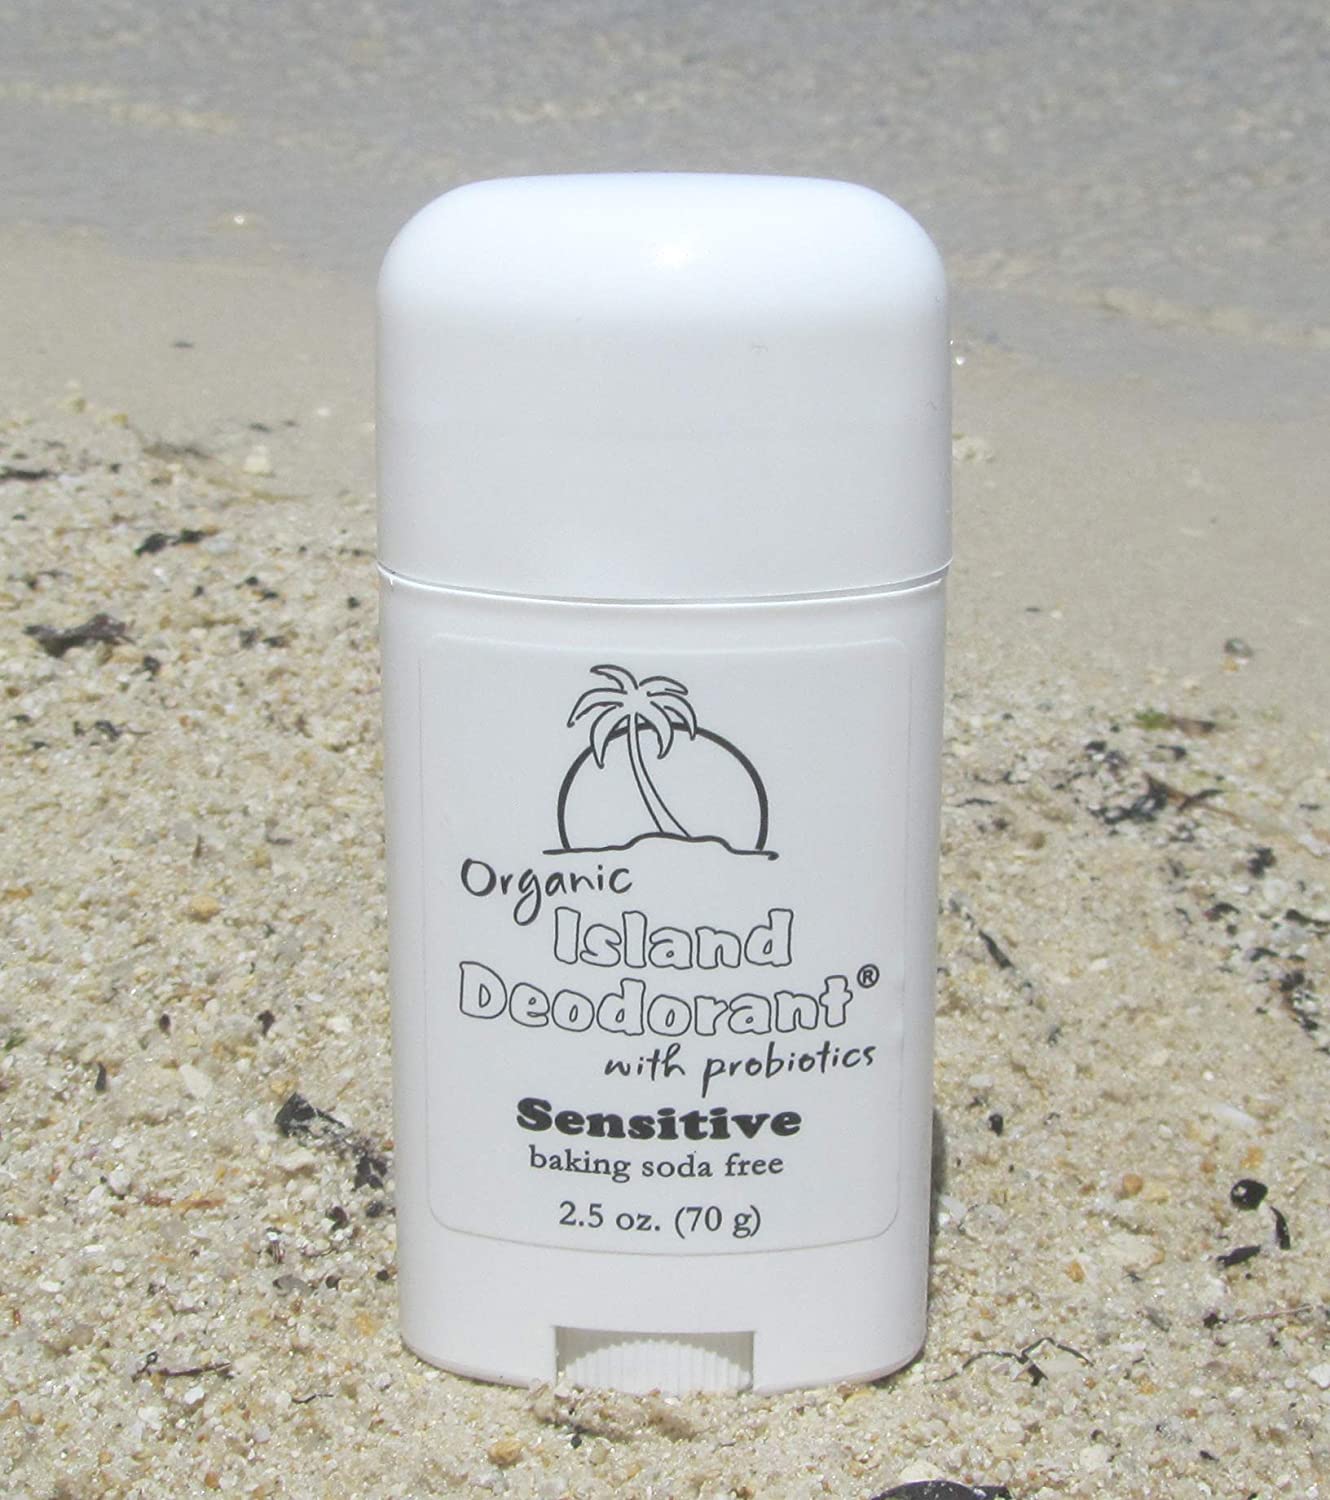 Organic Island Deodorant - Probiotics for Sensitive Skin